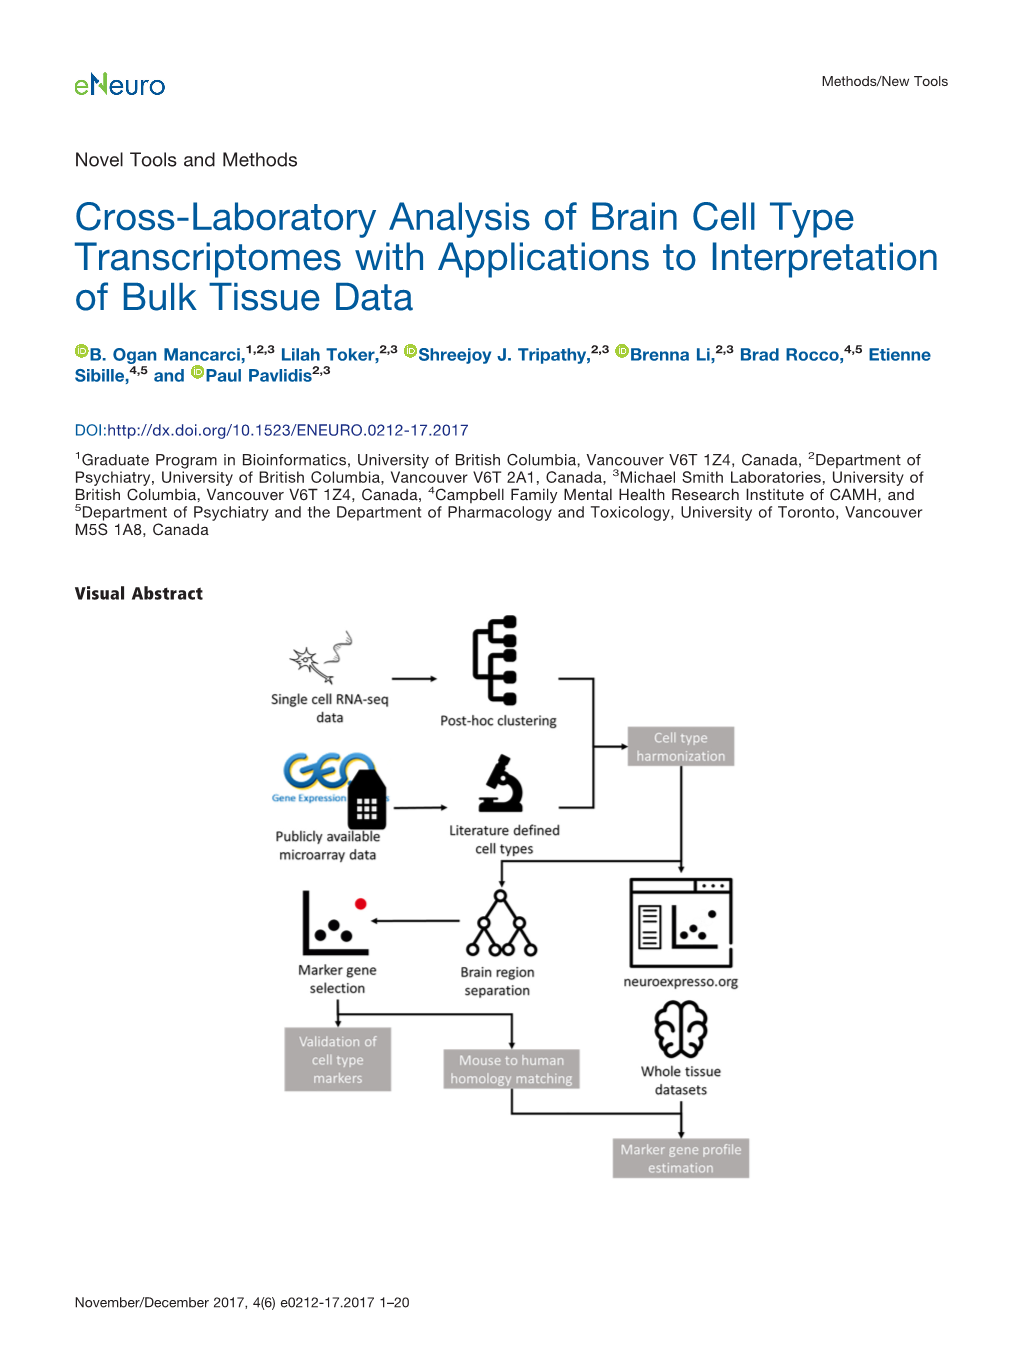 Cross-Laboratory Analysis of Brain Cell Type Transcriptomes with Applications to Interpretation of Bulk Tissue Data